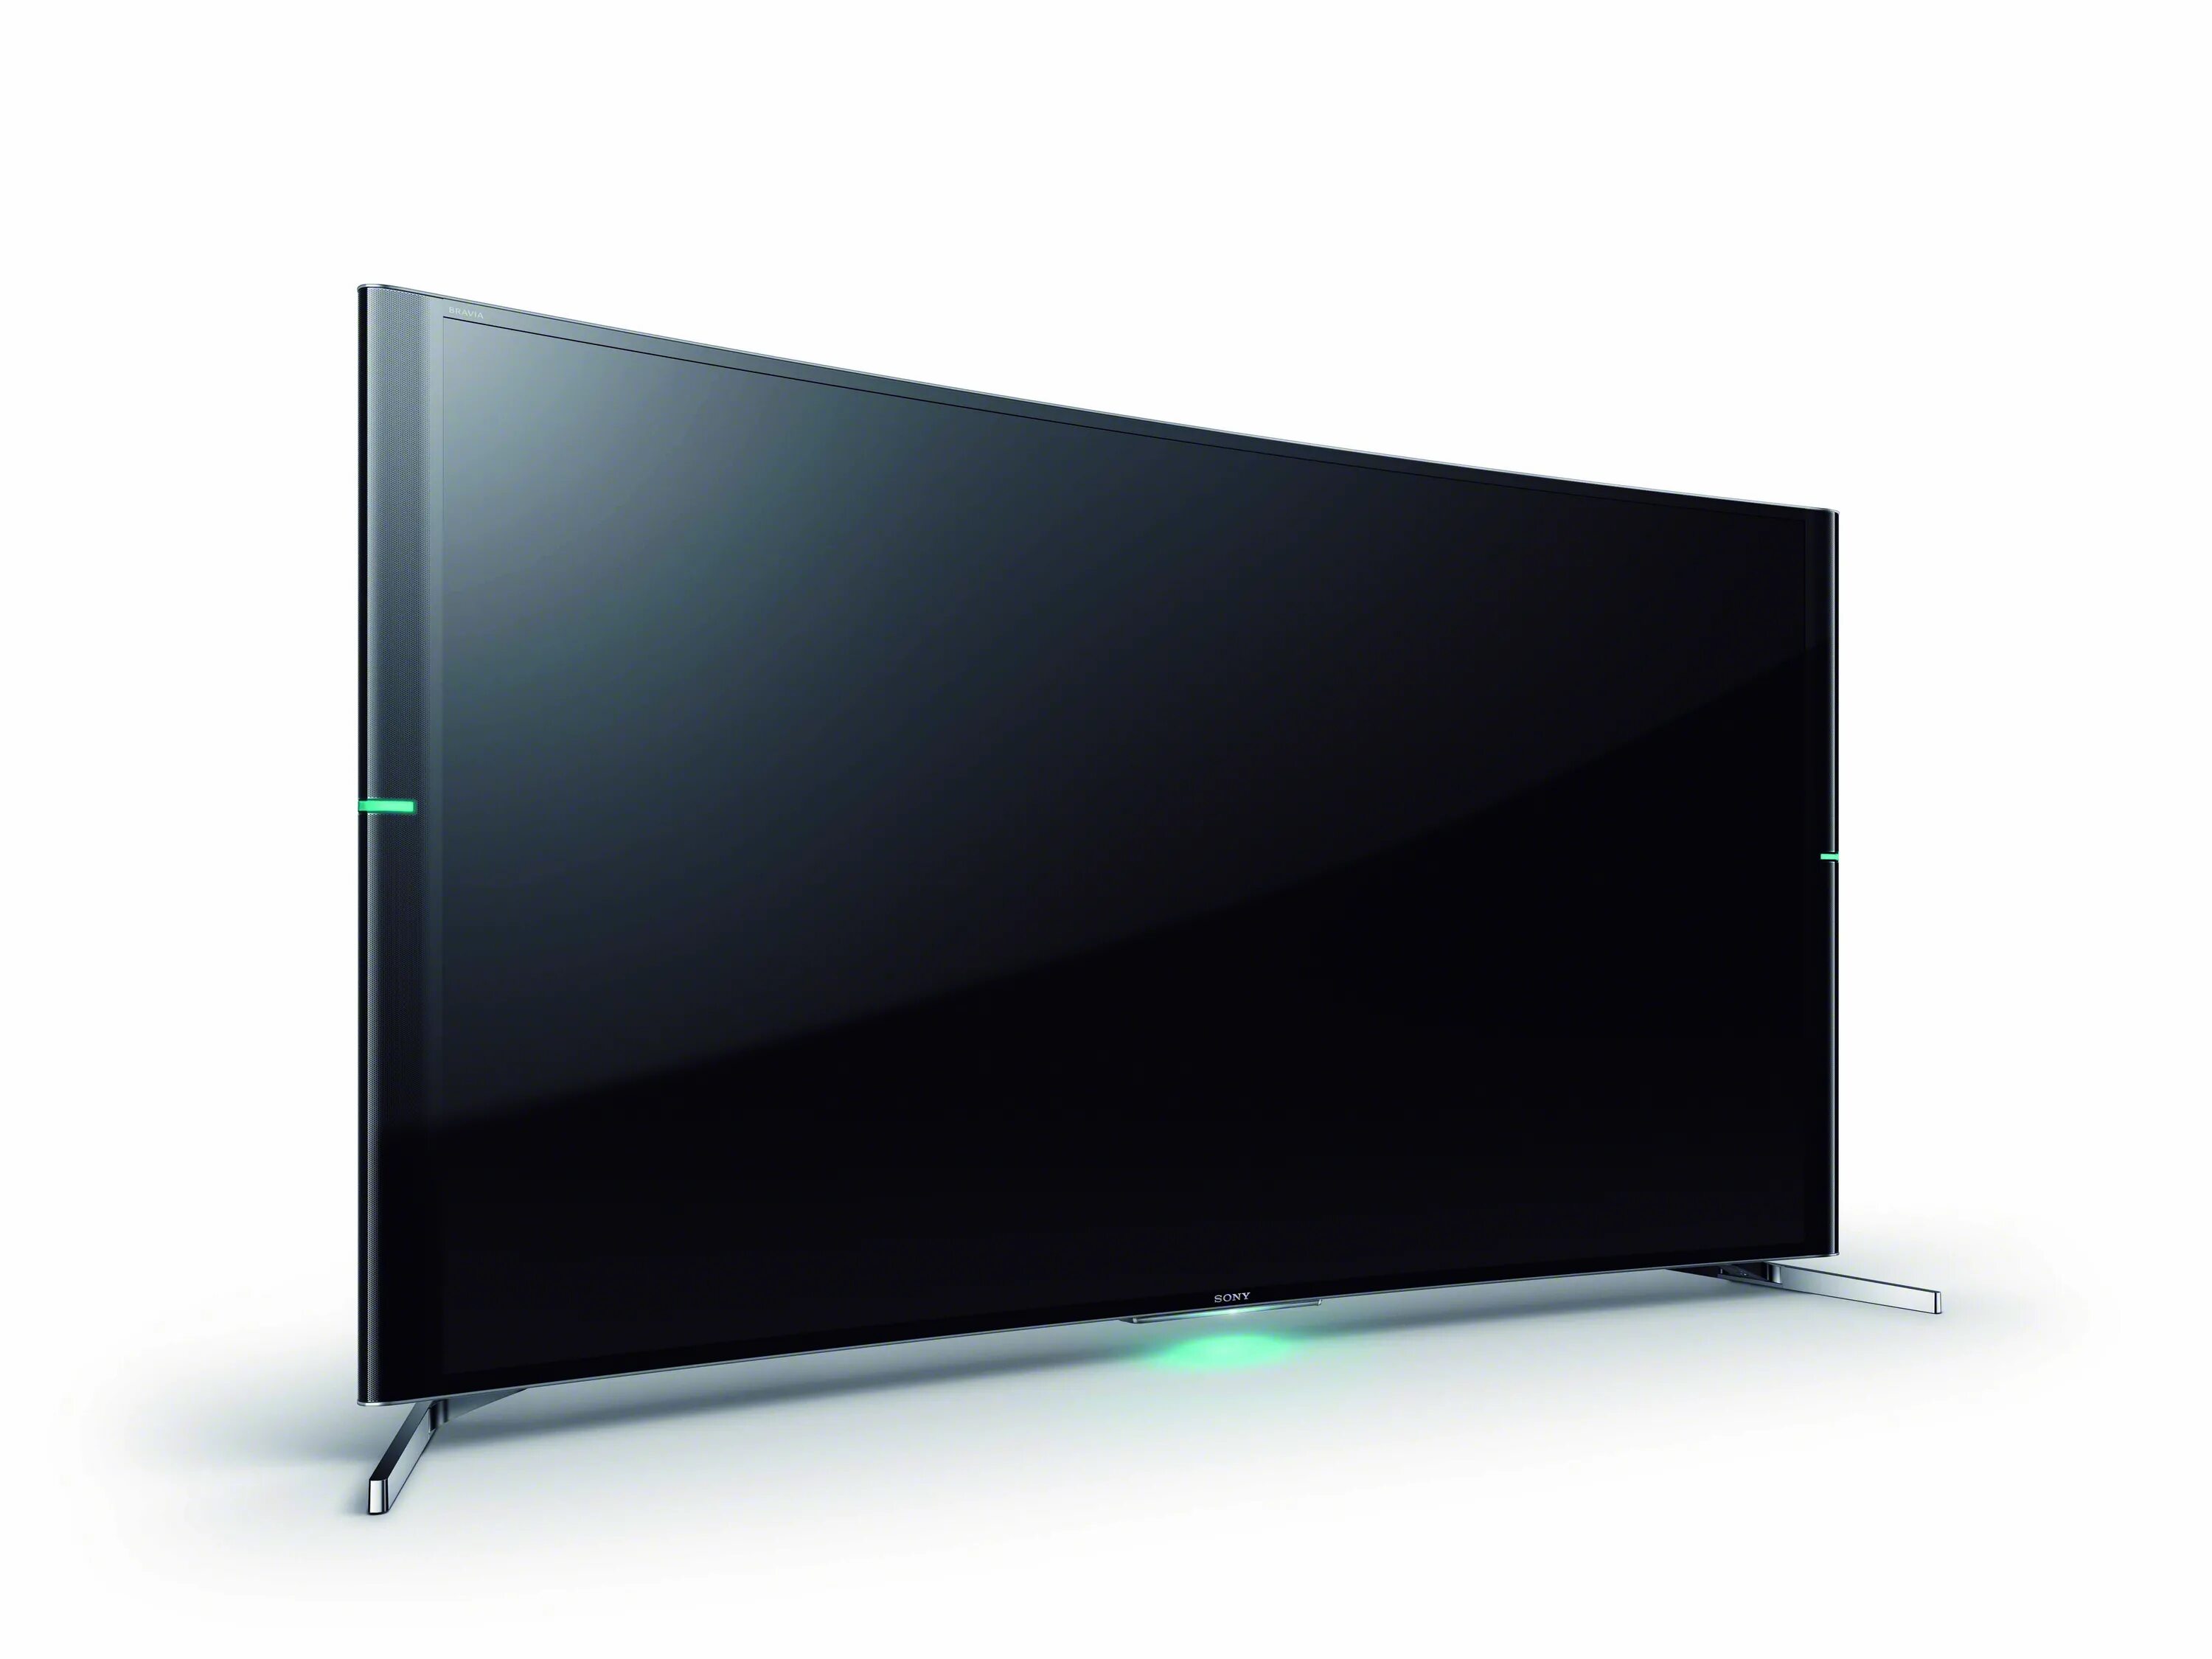 Телевизор Sony KD-65s9005b 65" (2014). Сони бравиа телевизор 55 дюймов. Телевизор Sony KD-75s9005b 75" (2014). Sony 55 дюймов купить